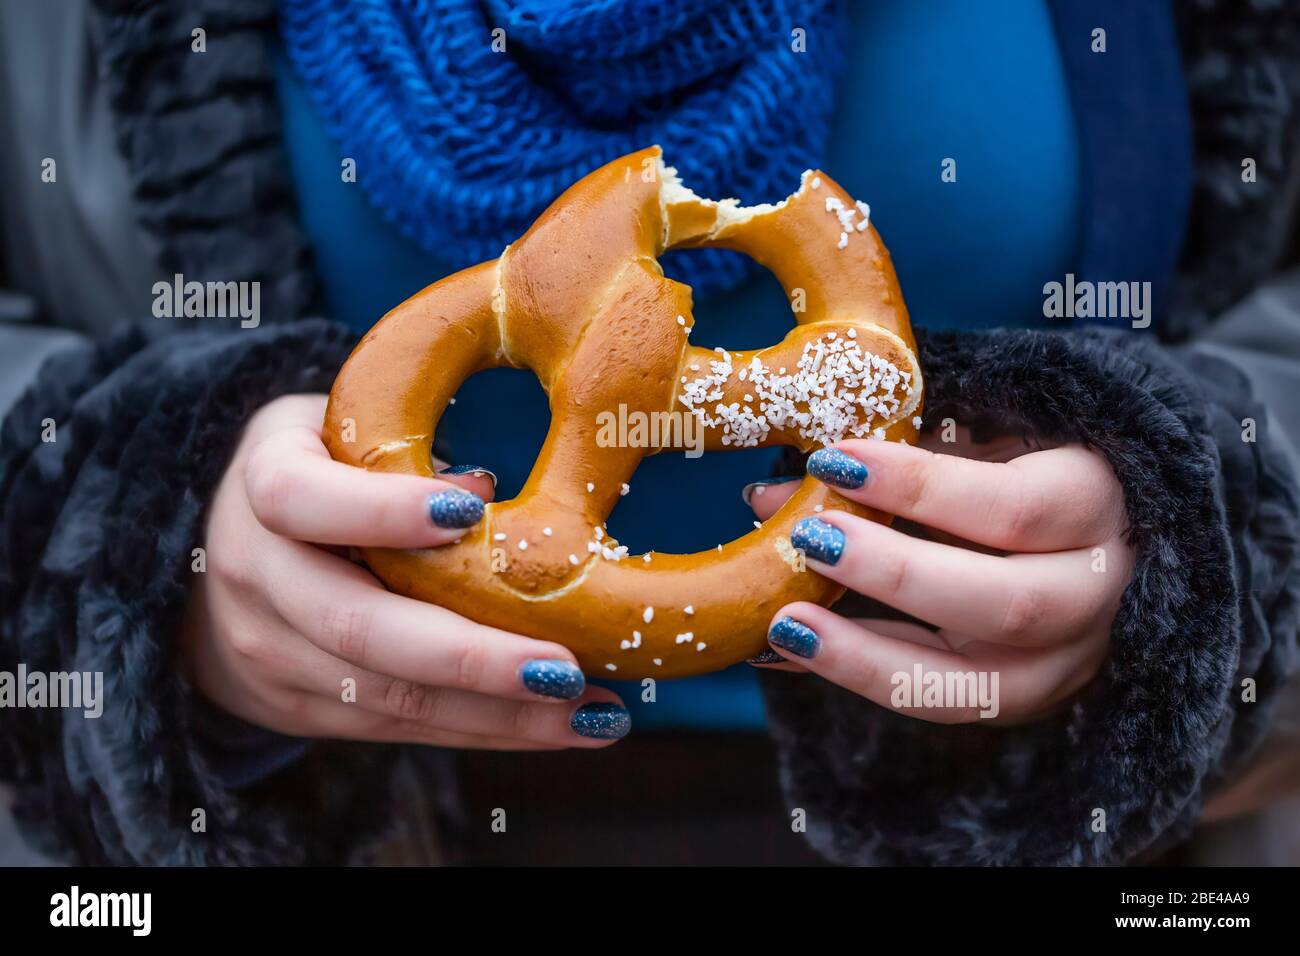 Woman eating a pretzel; New York City, New York, United States of America Stock Photo